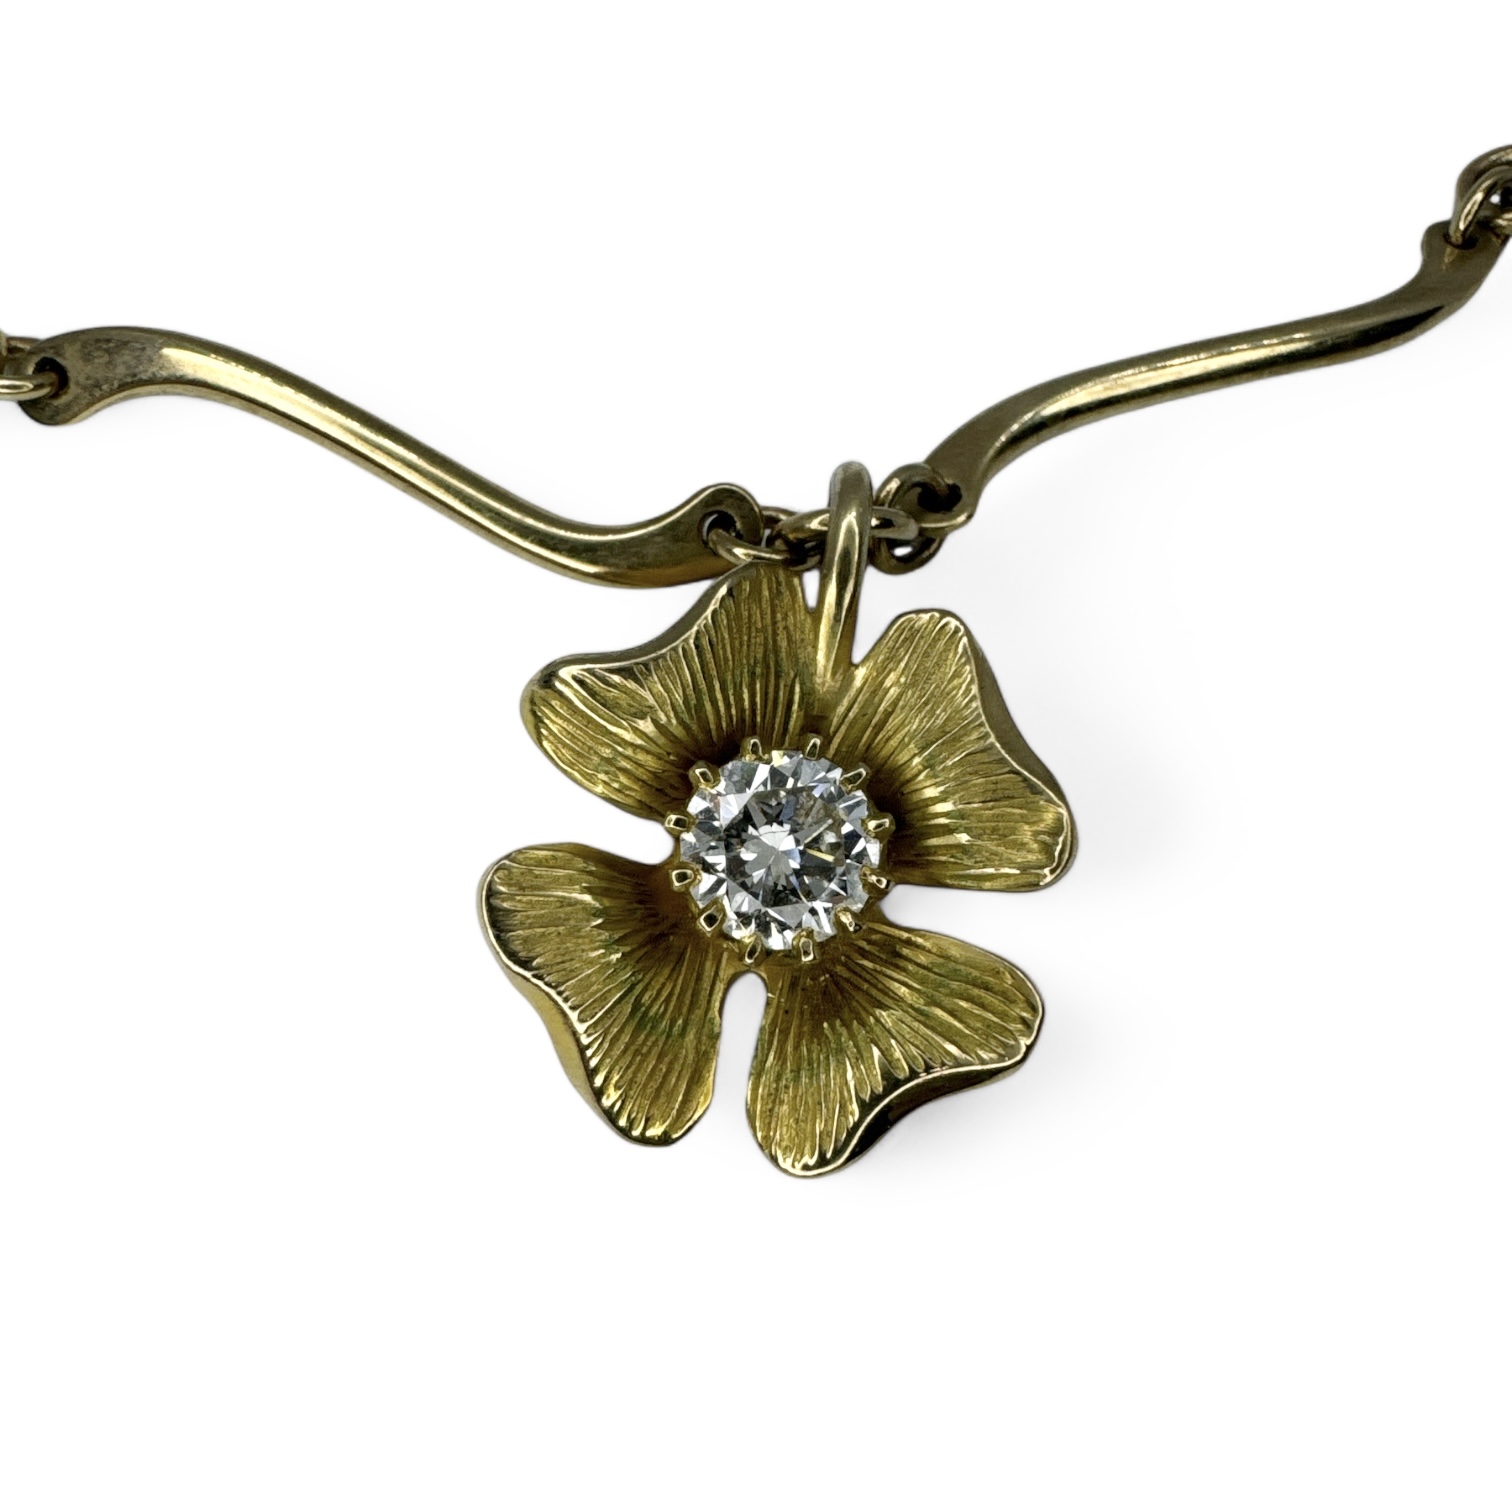 A 9ct gold estimated 0.85 carat diamond set flower pendant on a 9ct gold wave link necklace.